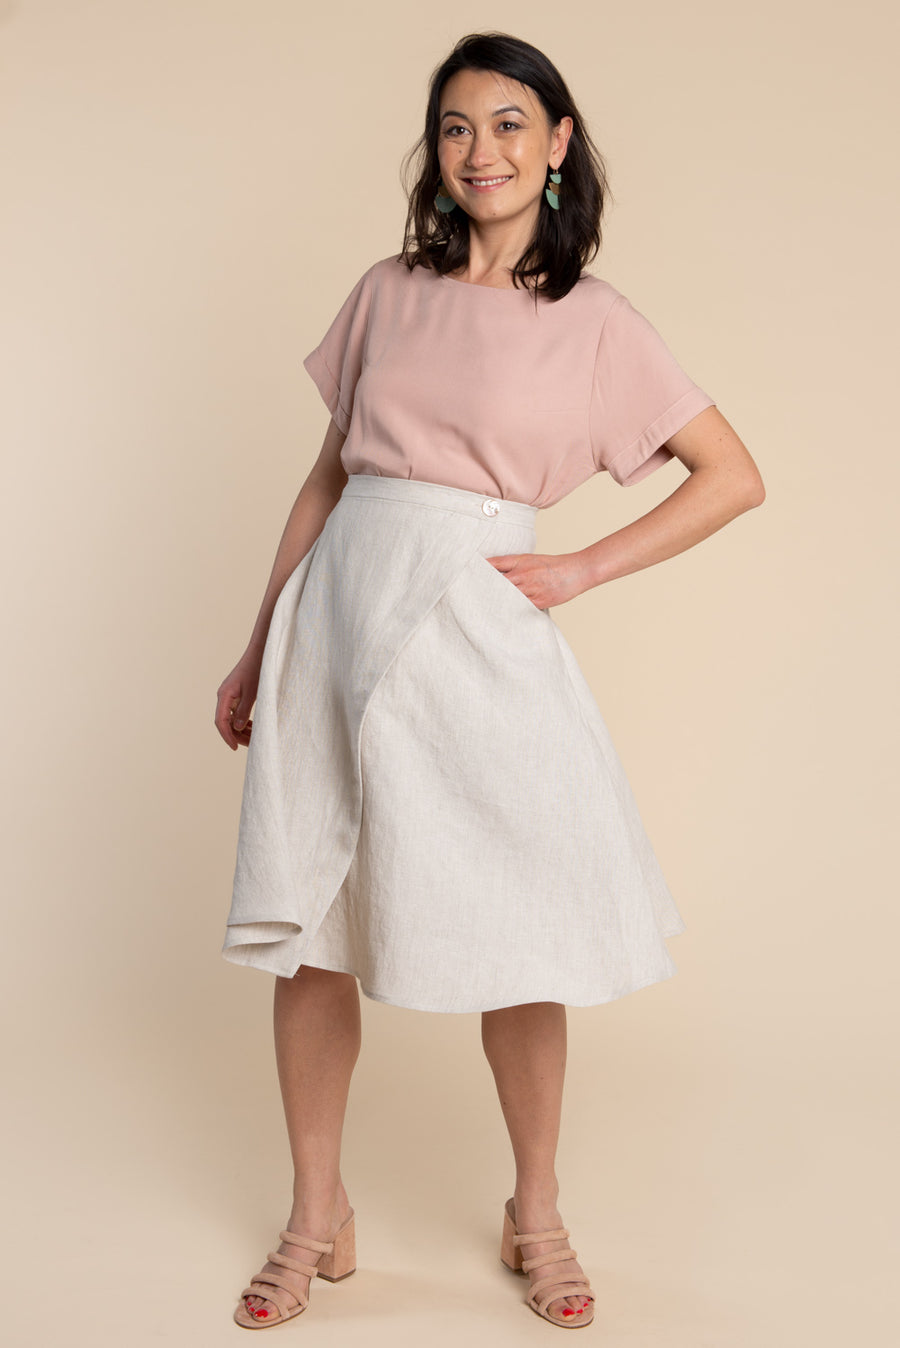 Starter Skirt Sewing Pattern (Paper or PDF) - Sew Chic Patterns